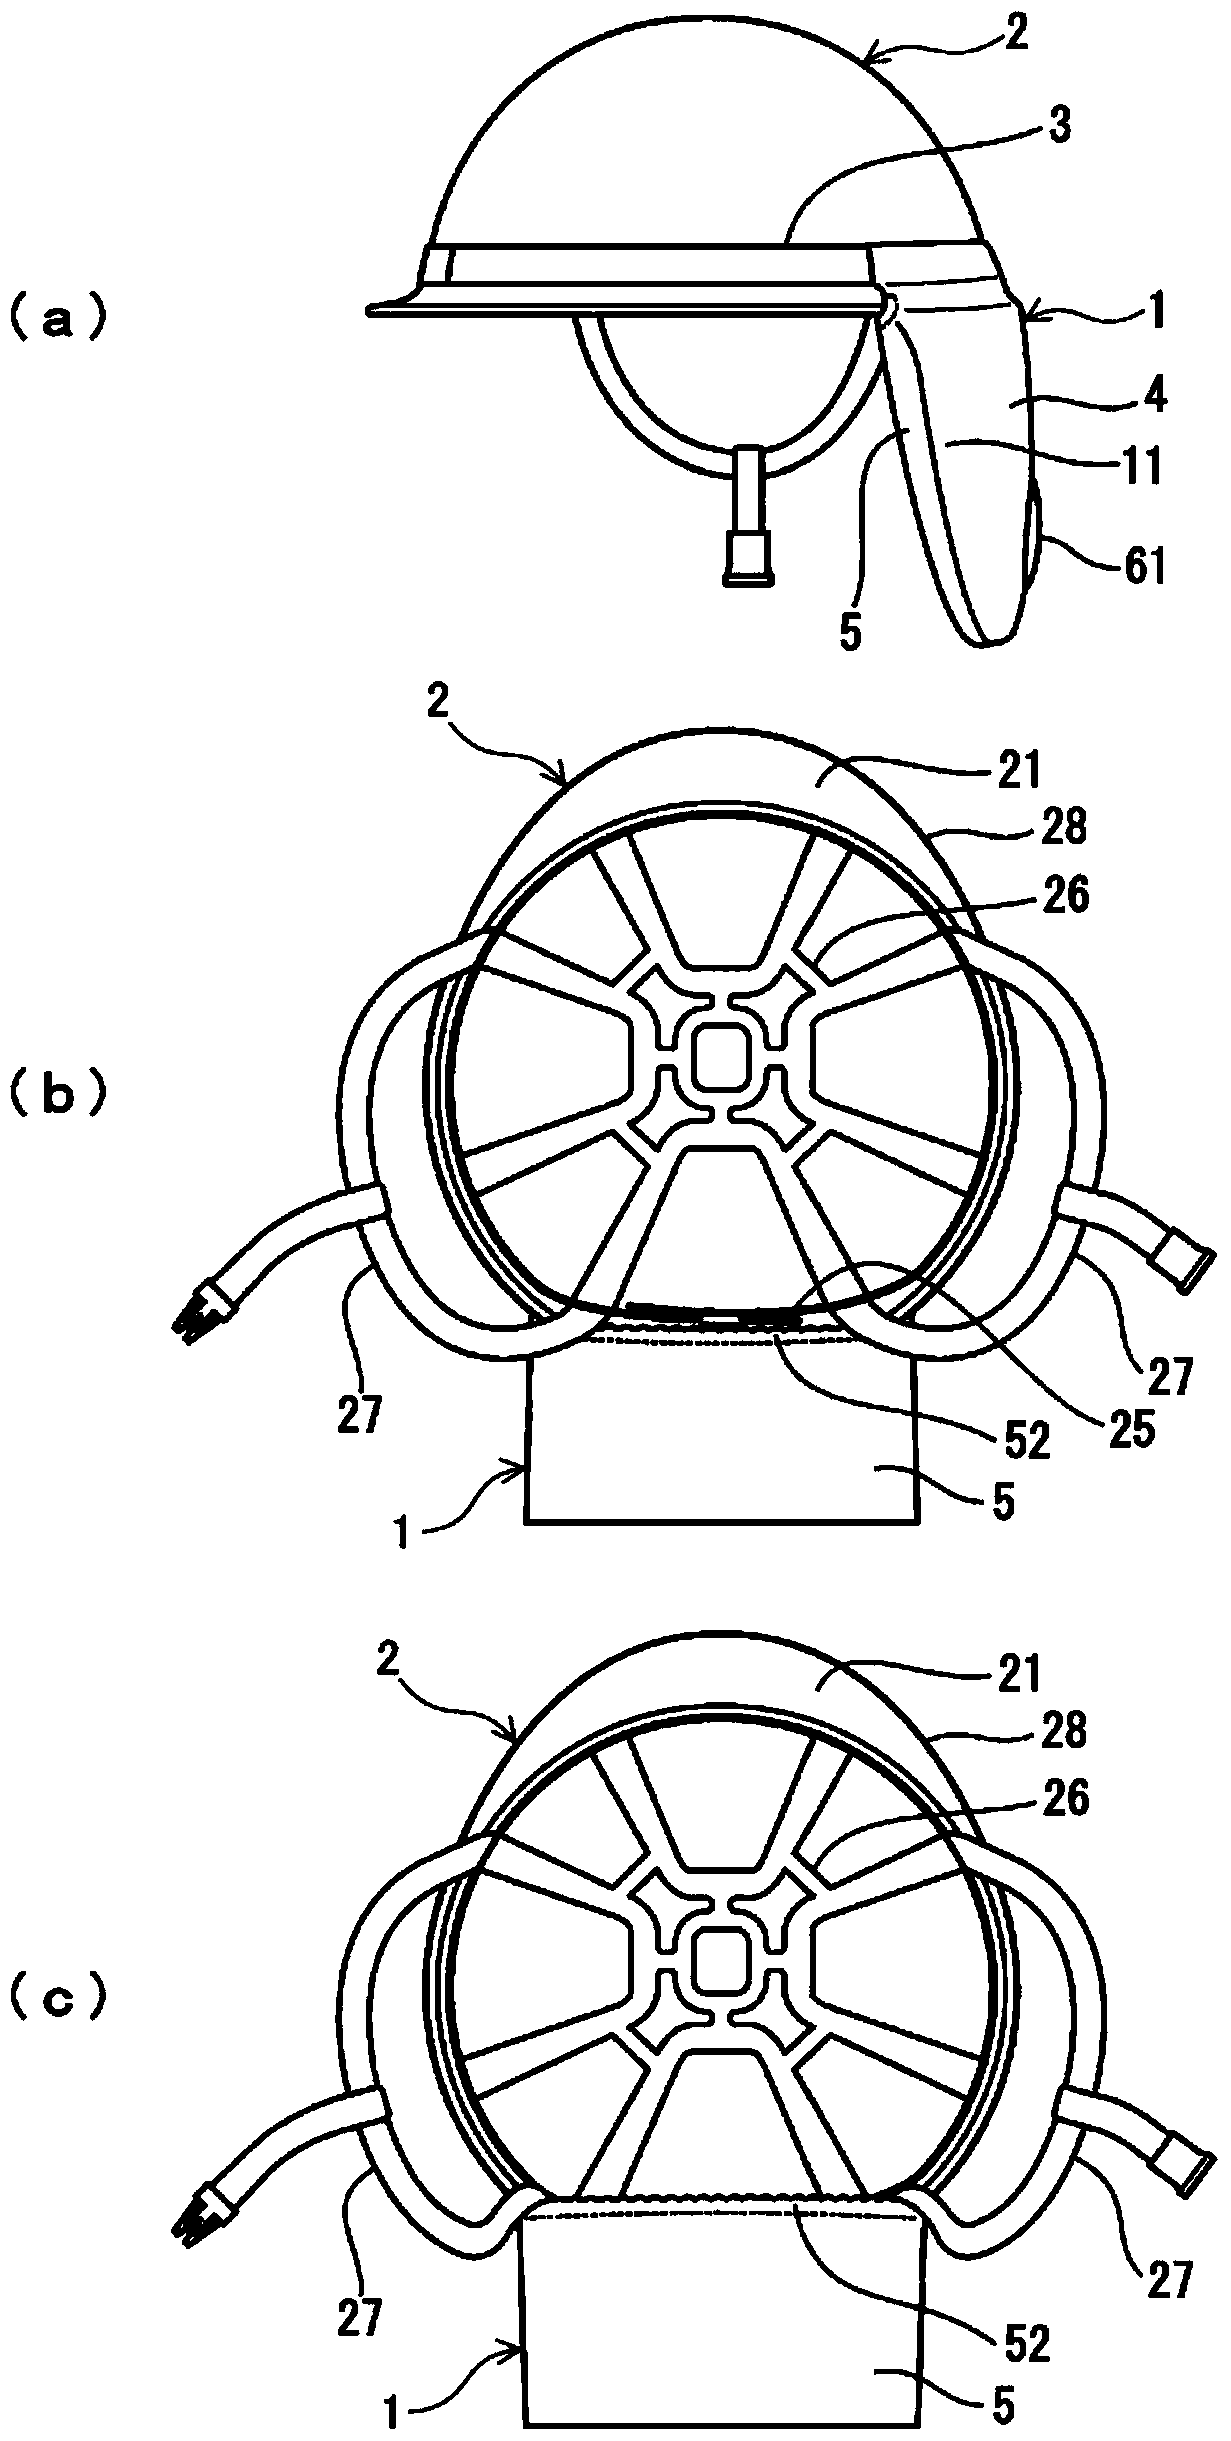 Ventilation device inside the helmet